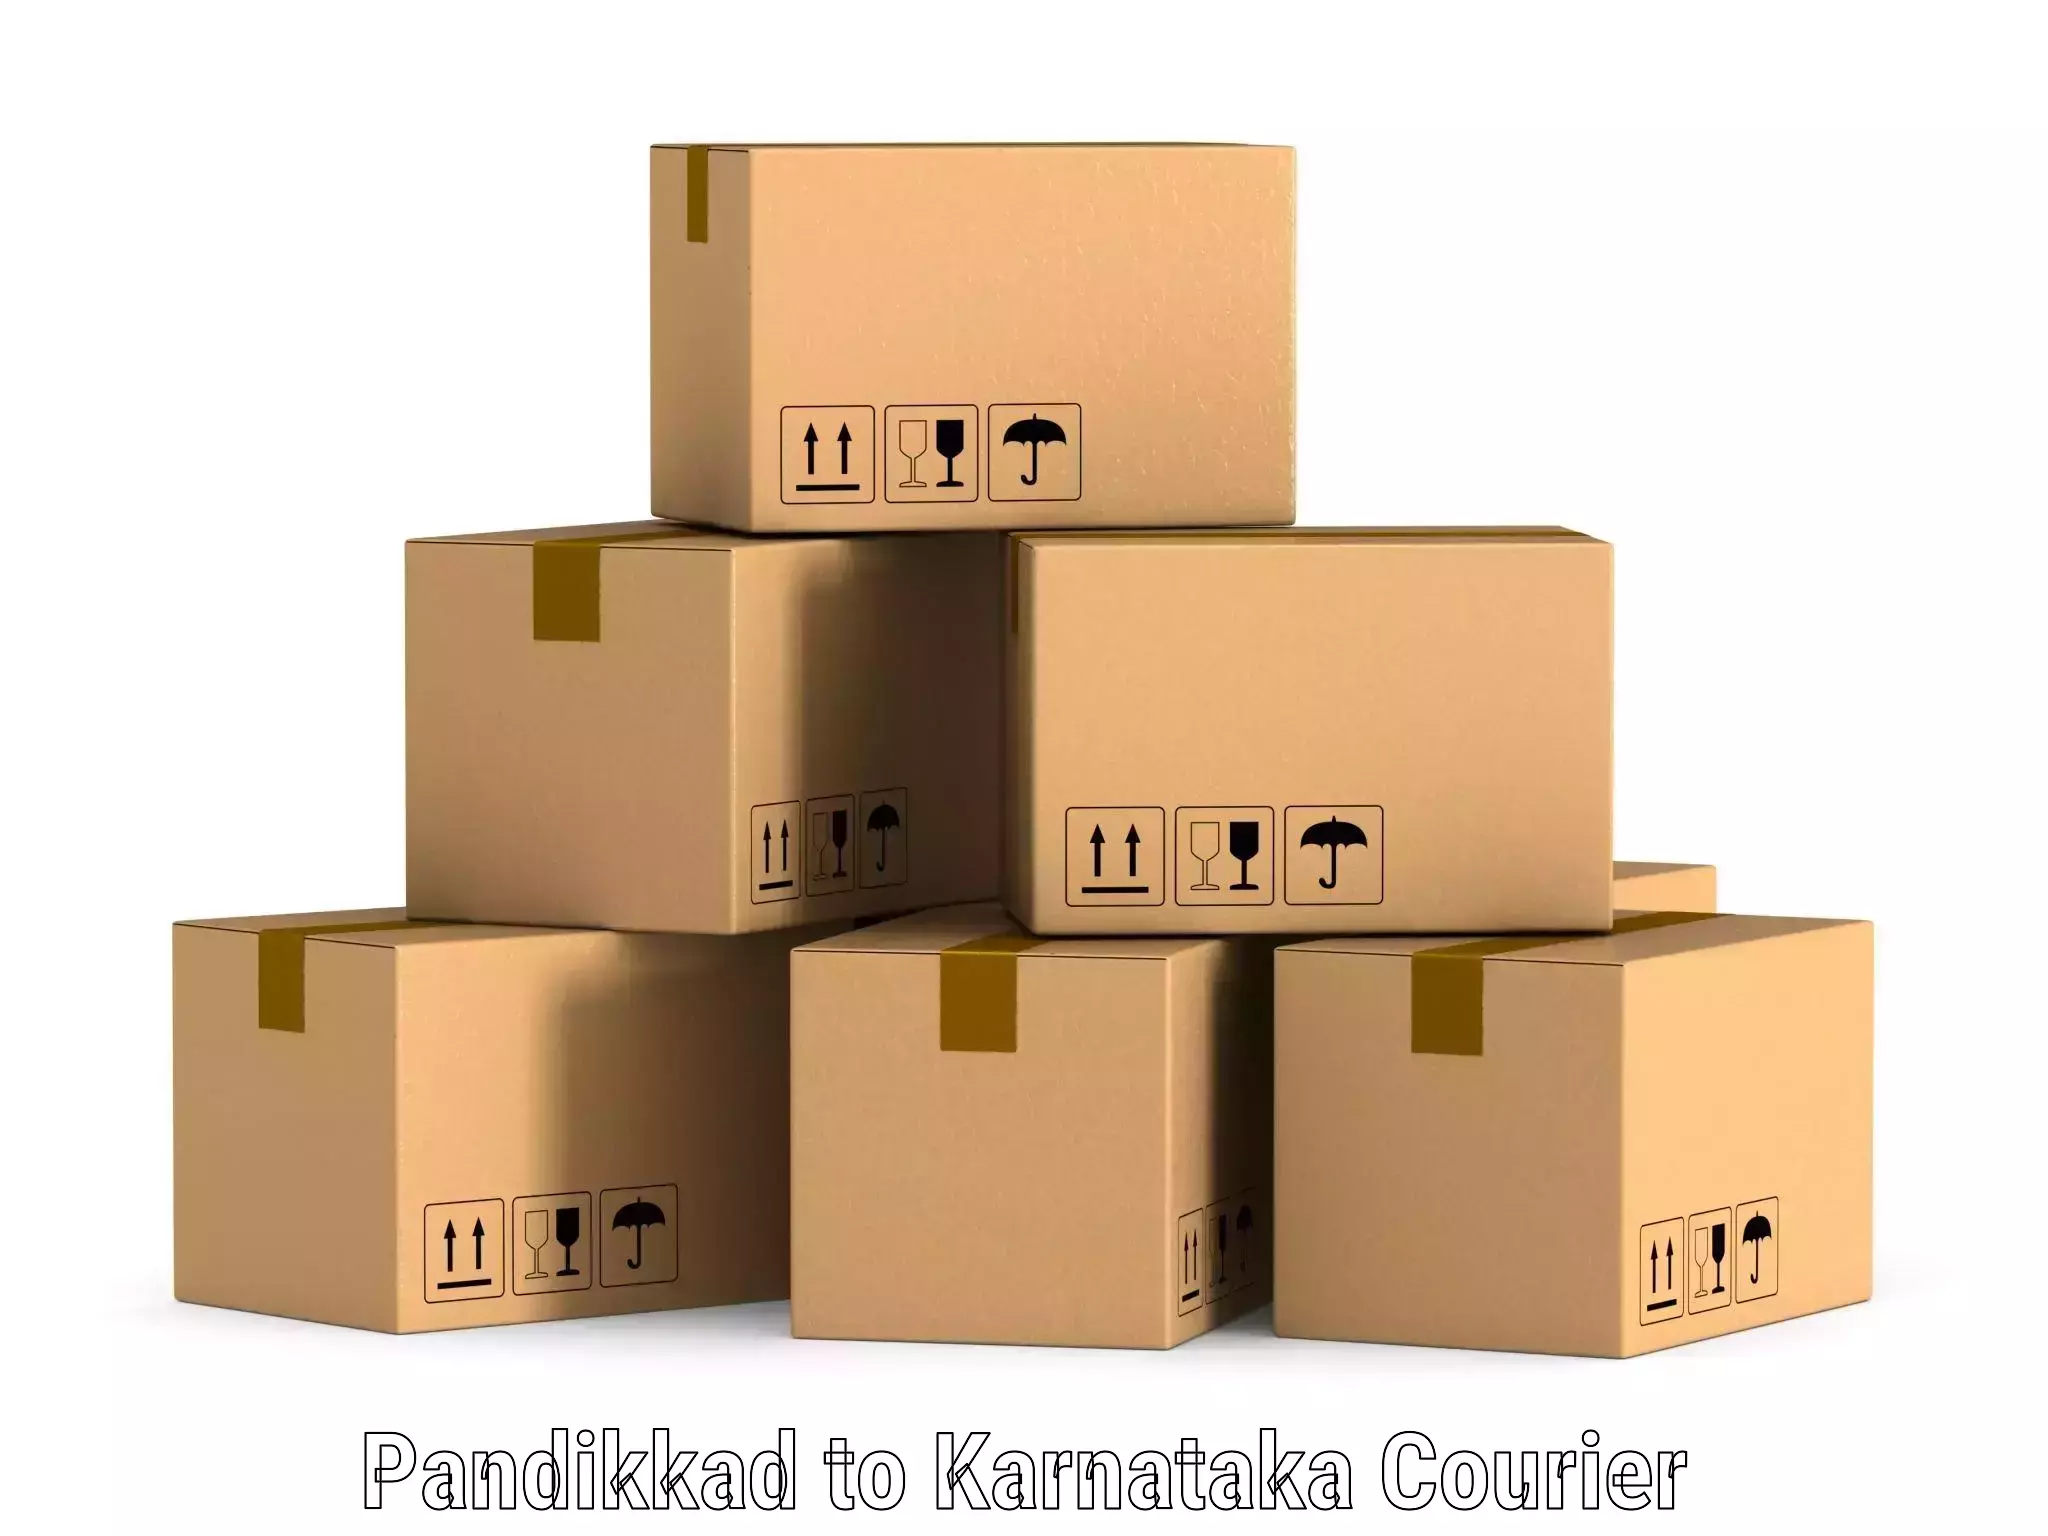 24/7 courier service in Pandikkad to Bangarapet